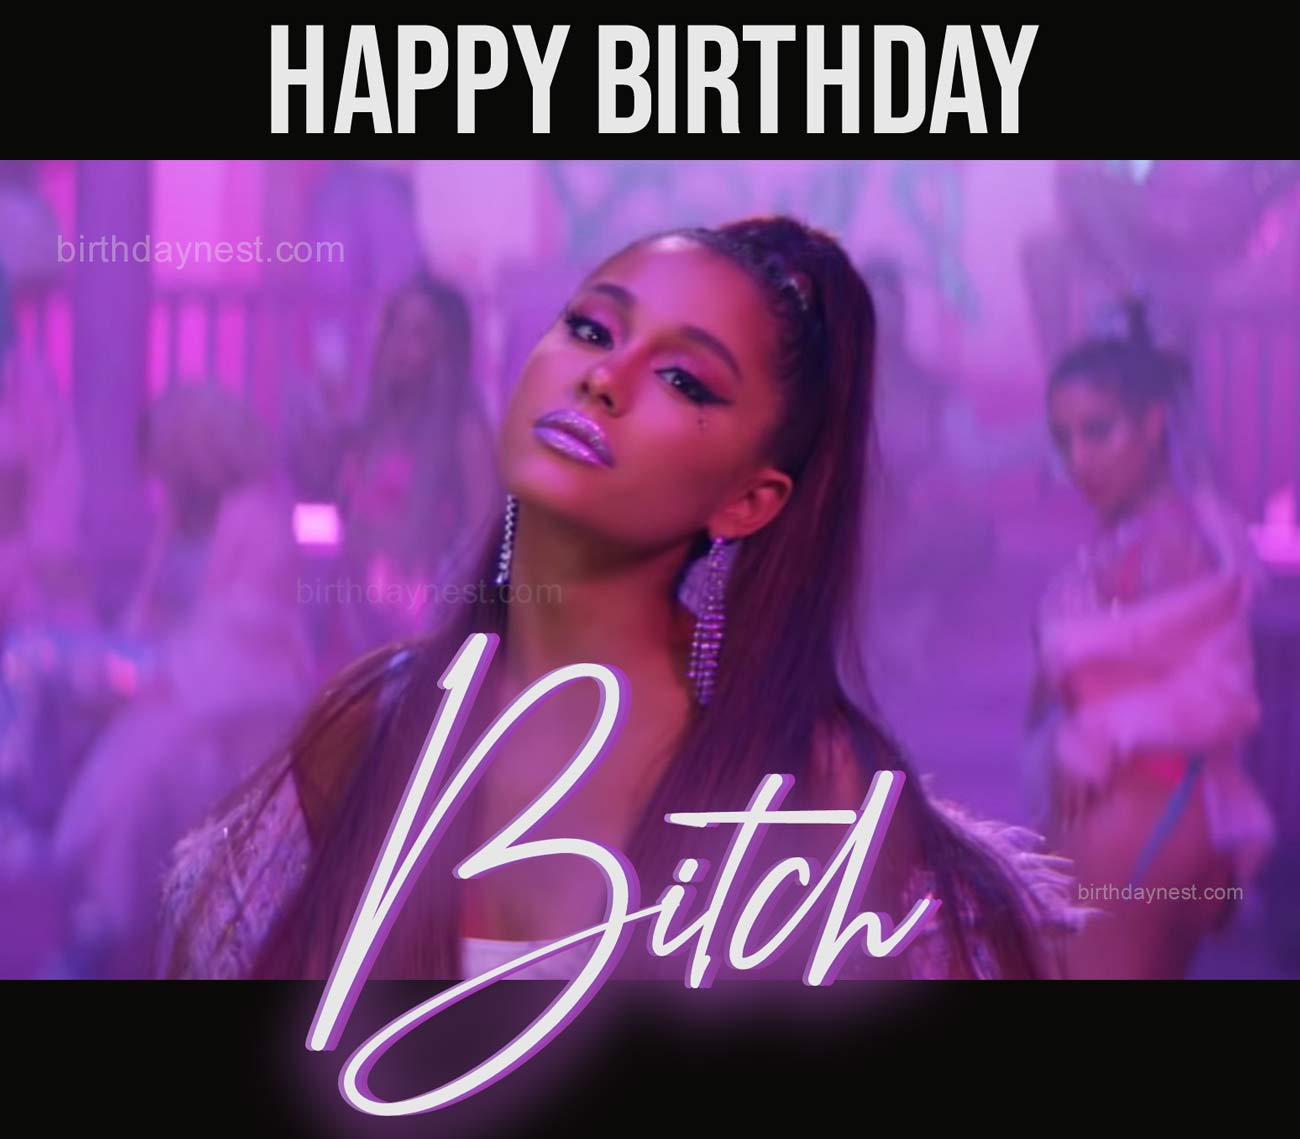 Ariana Grande birthday memes